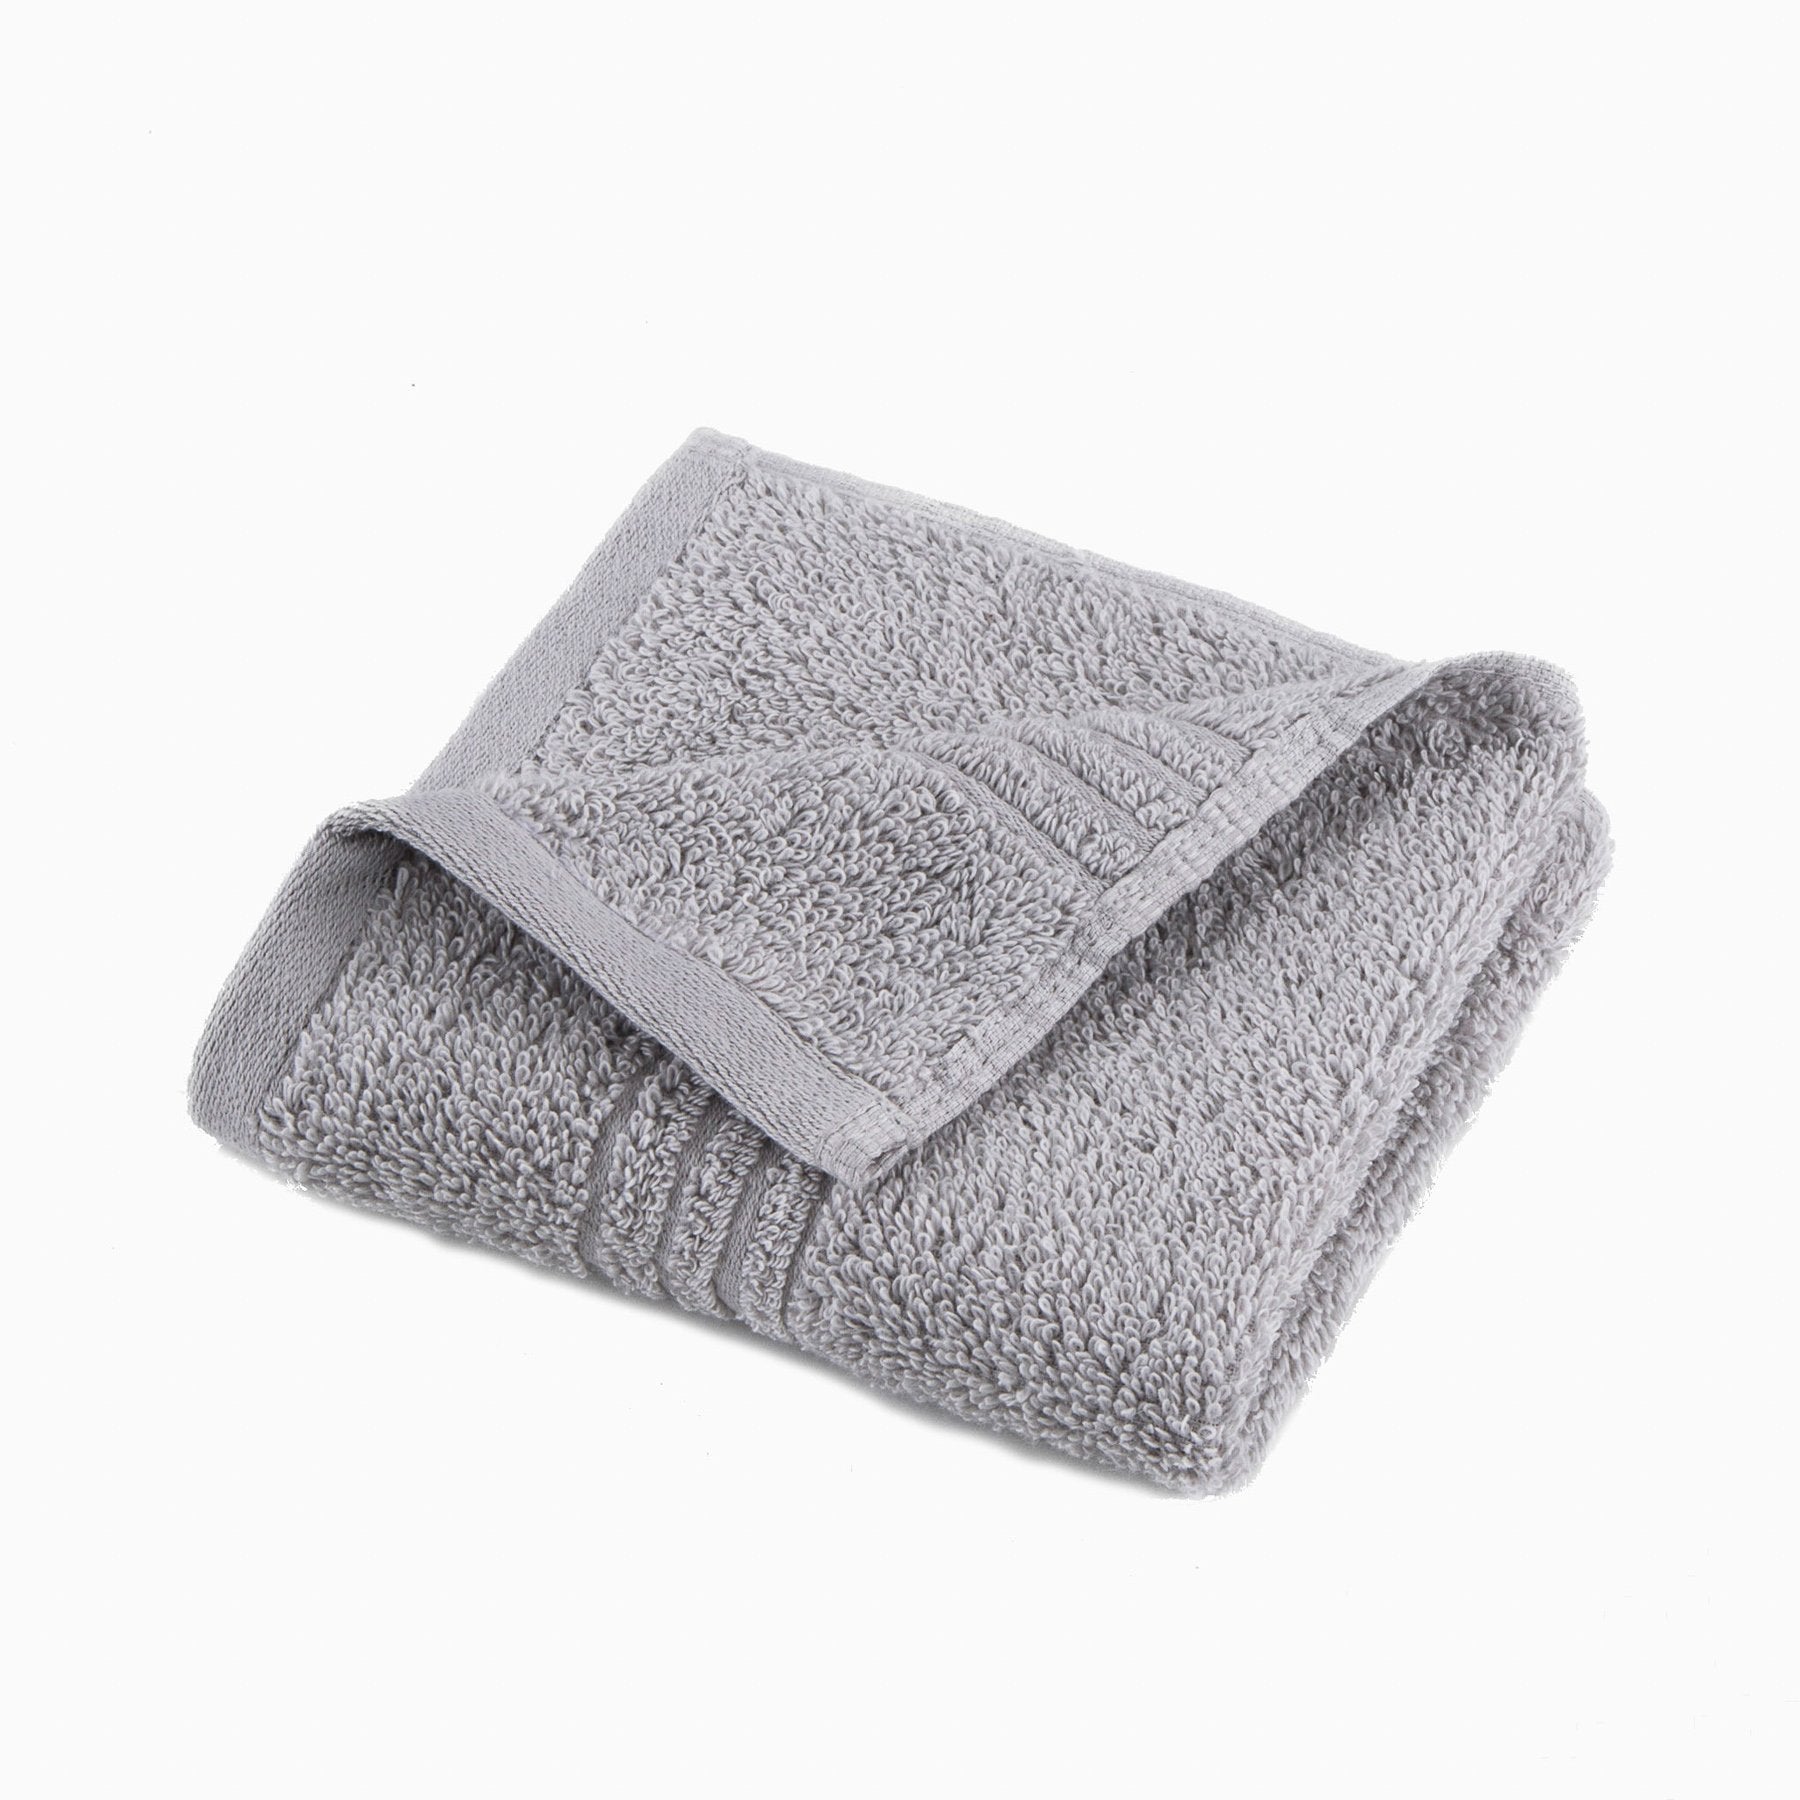 Grey Bath Towels